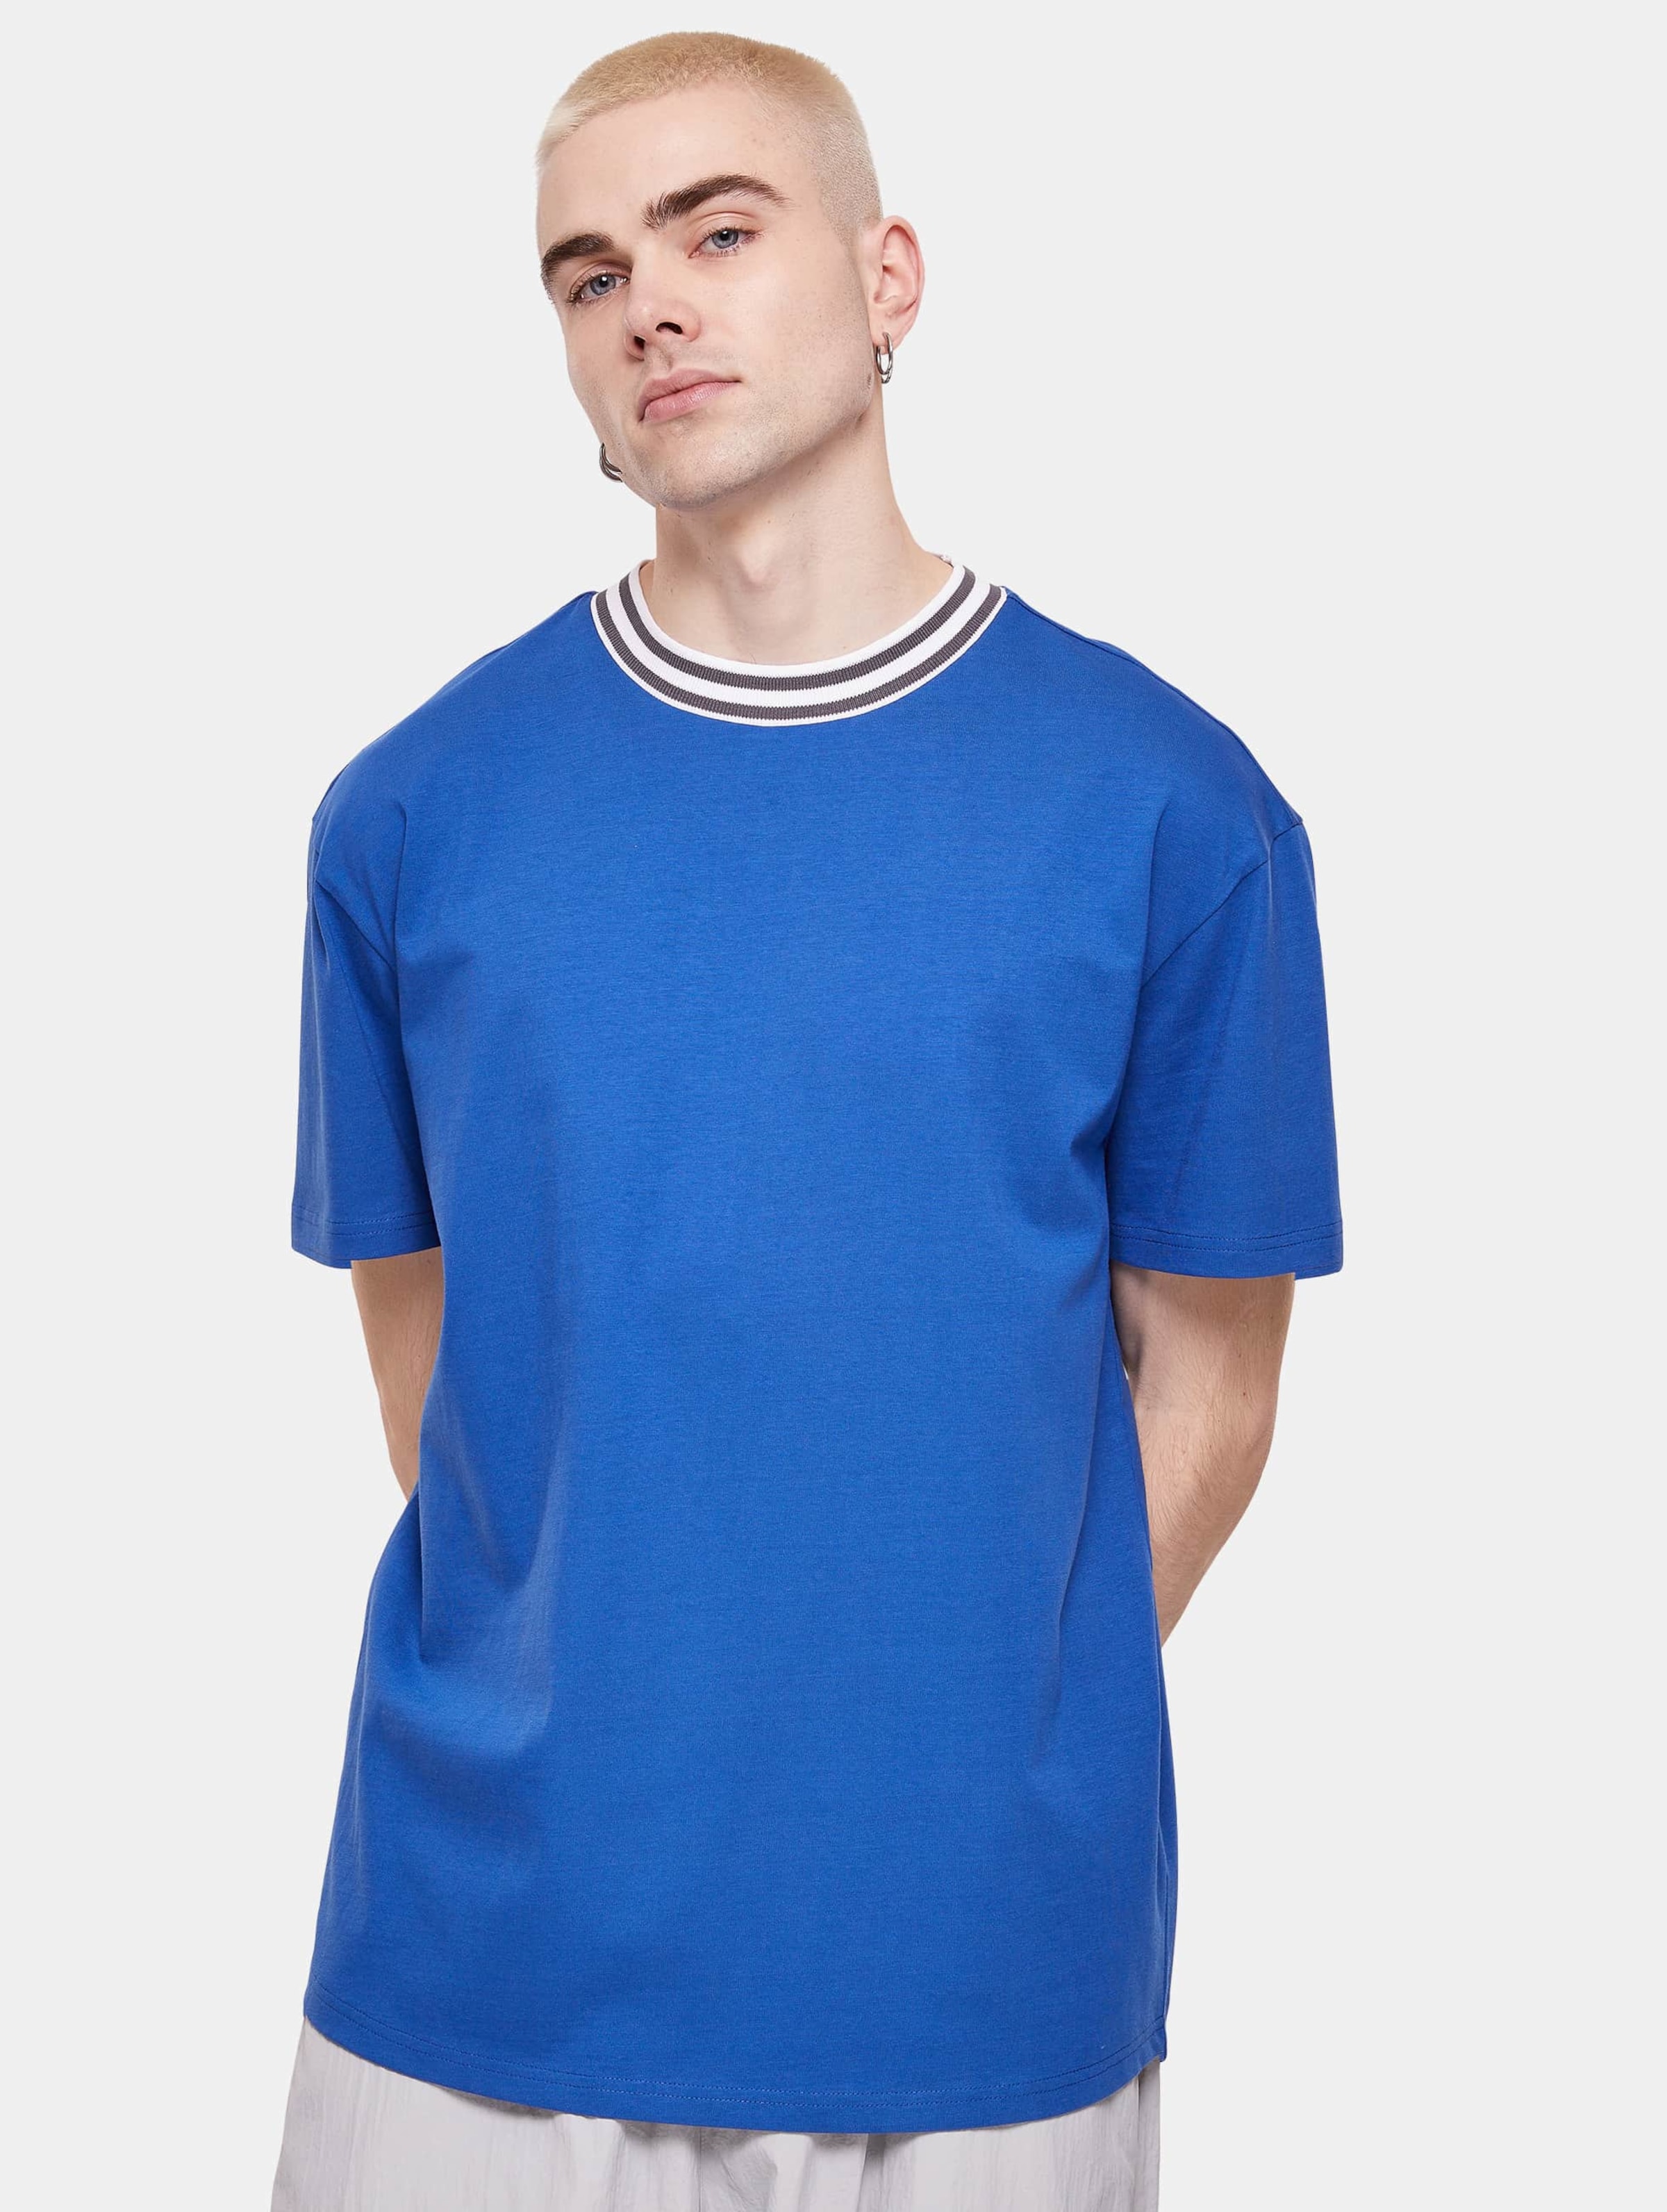 Urban Classics - Kicker Mens Tshirt - XL - Blauw